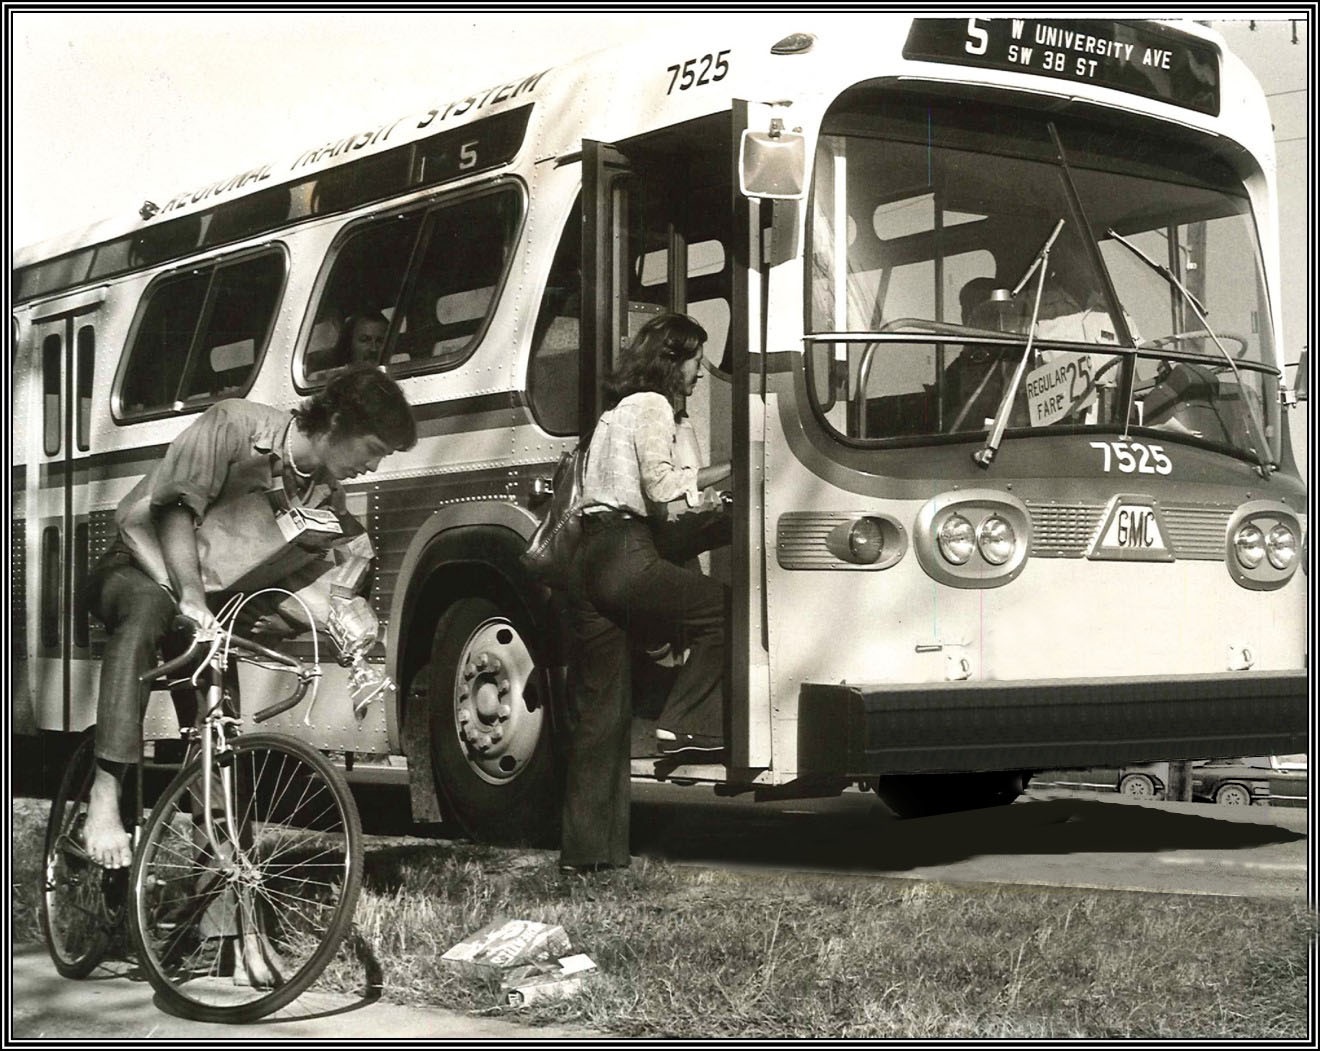 1975 Bike and pedestrian passenger board RTS bus